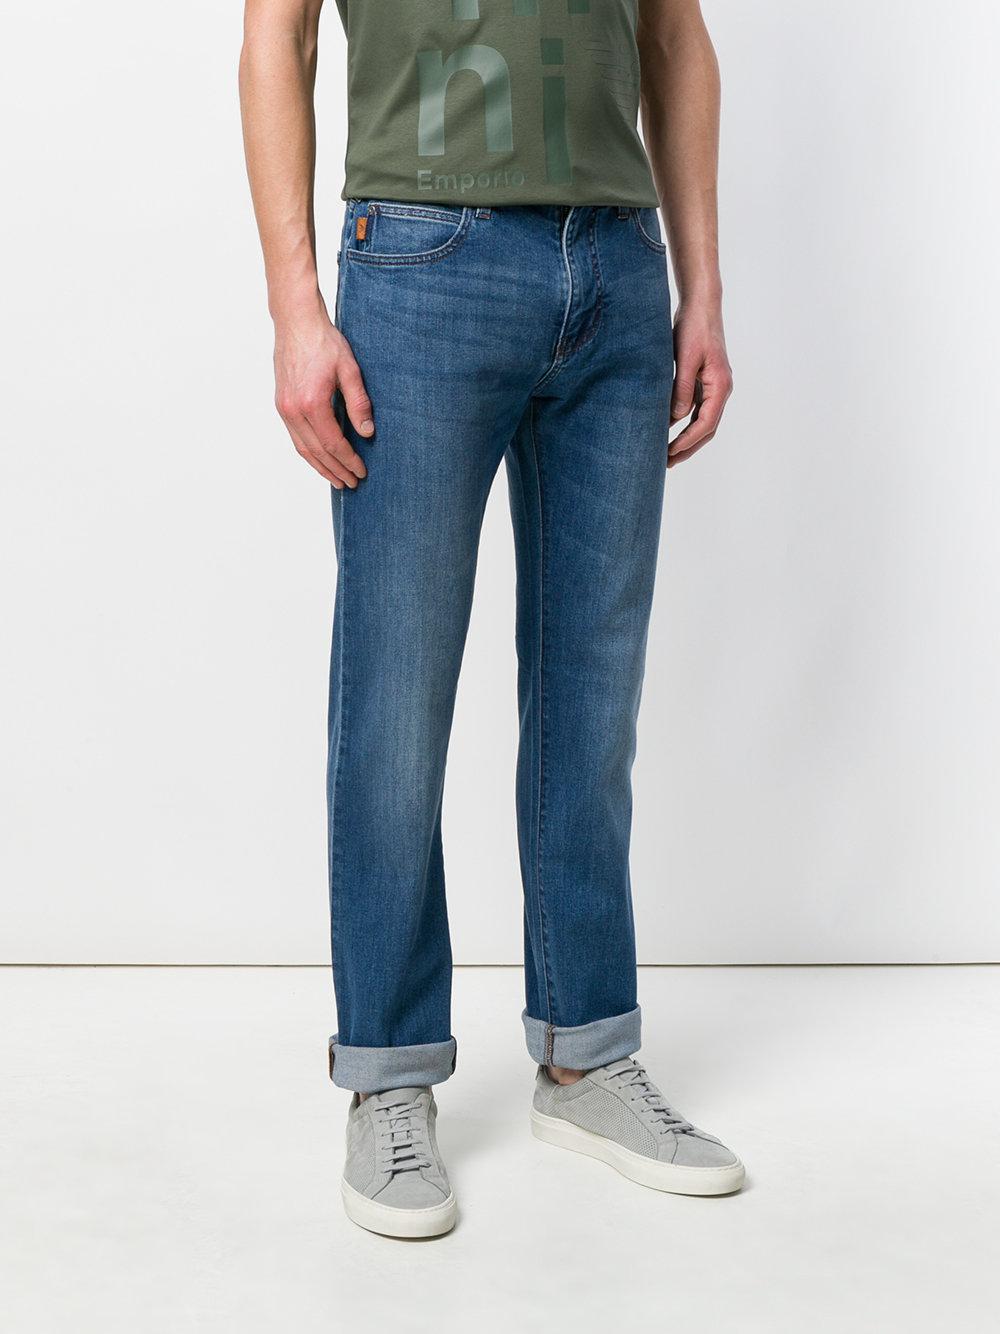 Emporio Armani Denim Stonewashed Straight Leg Jeans in Blue for Men - Lyst